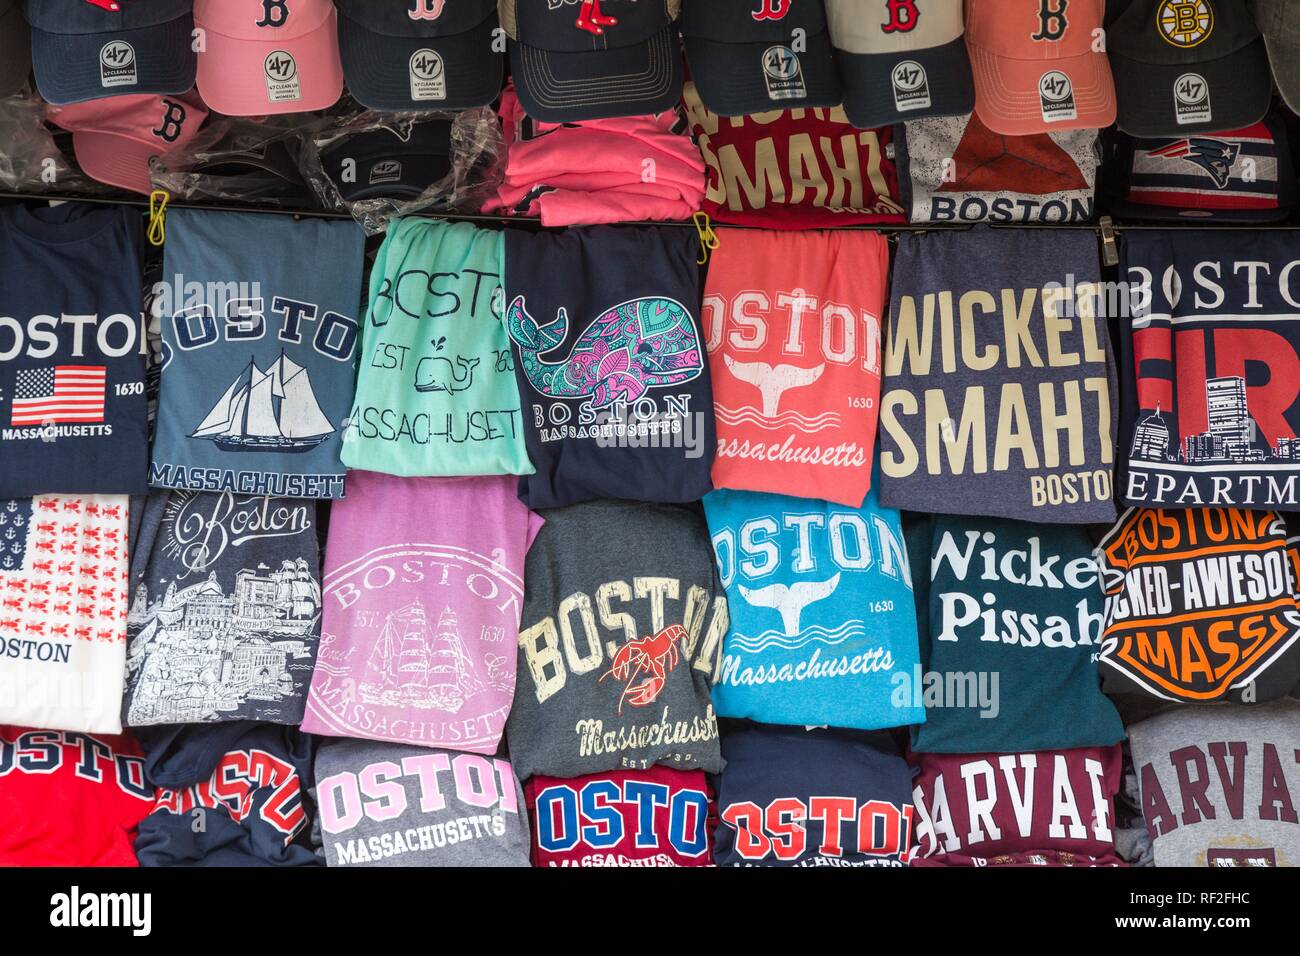 Boston camisas, camisetas, regalos, Booth, Boston, Massachusetts, EE.UU. Foto de stock